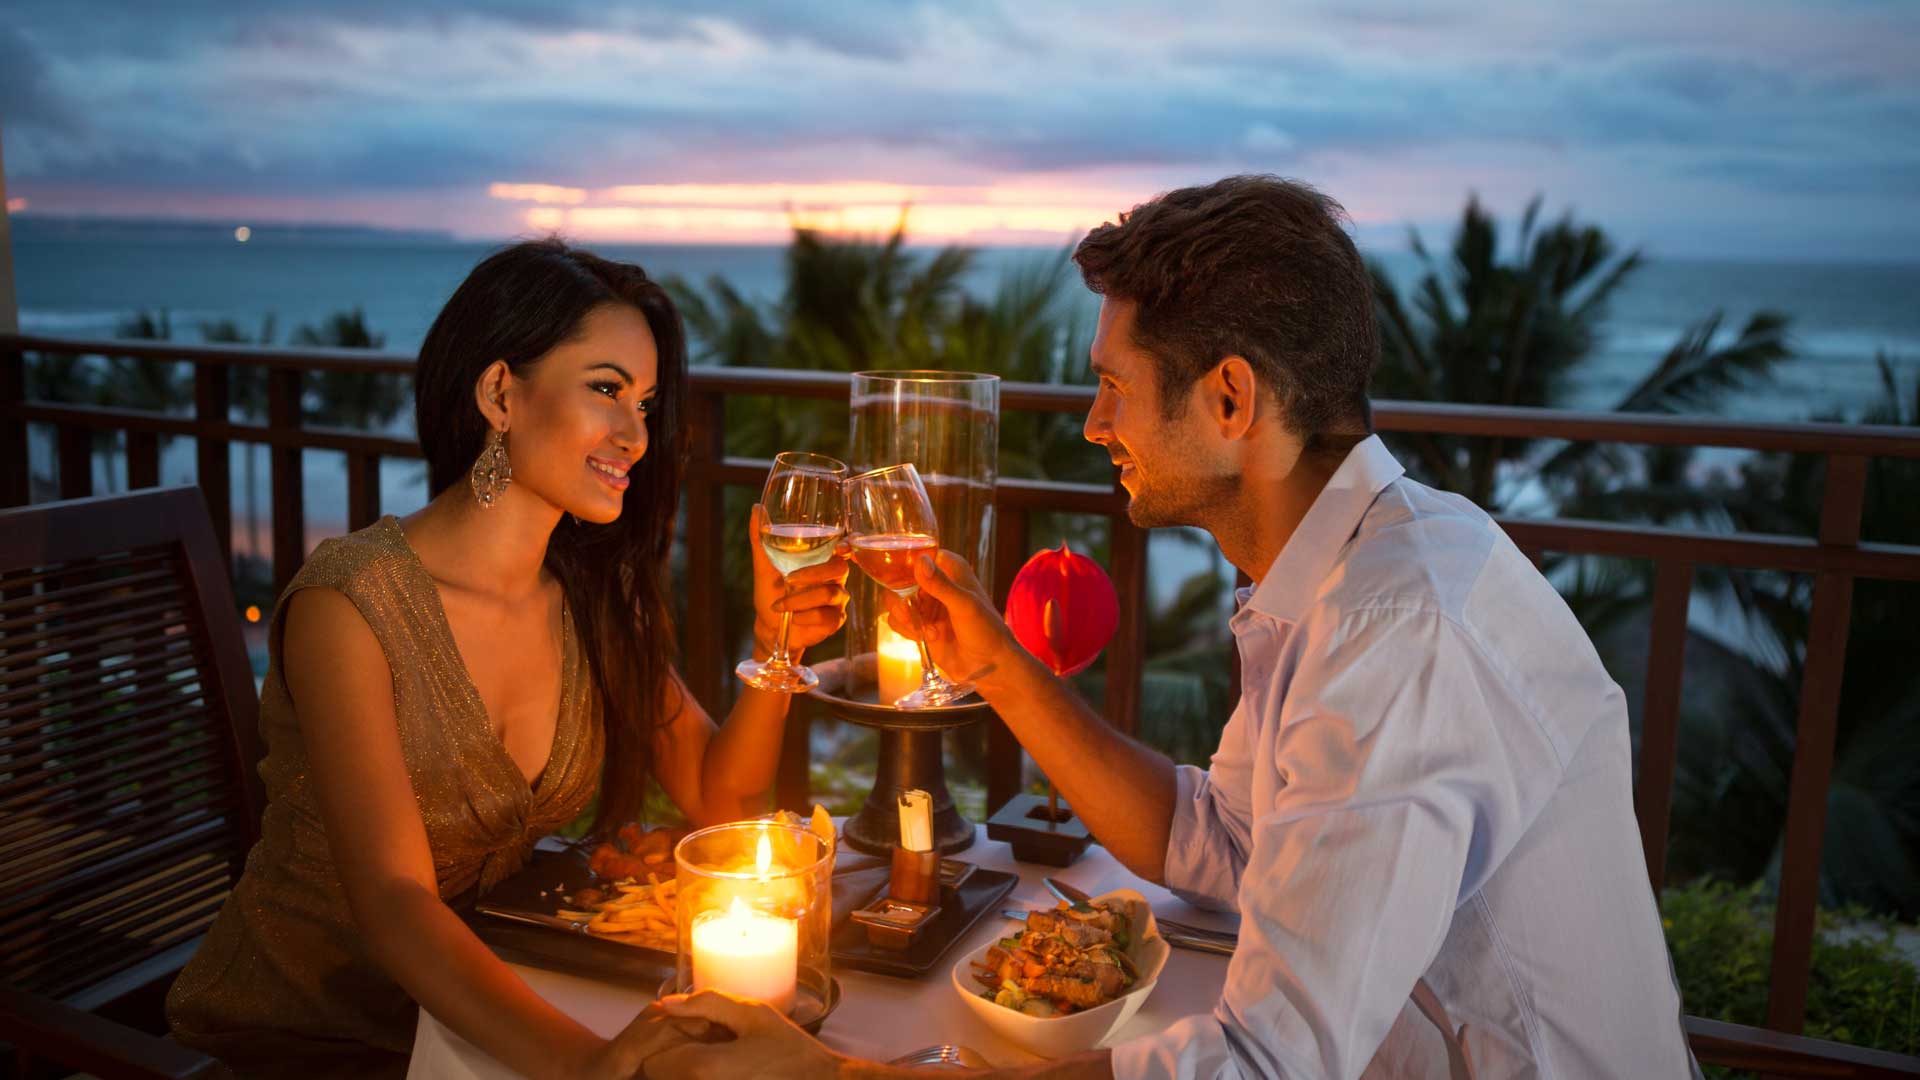 Romance for lovers: from prestigious European restaurants to ordinary apps